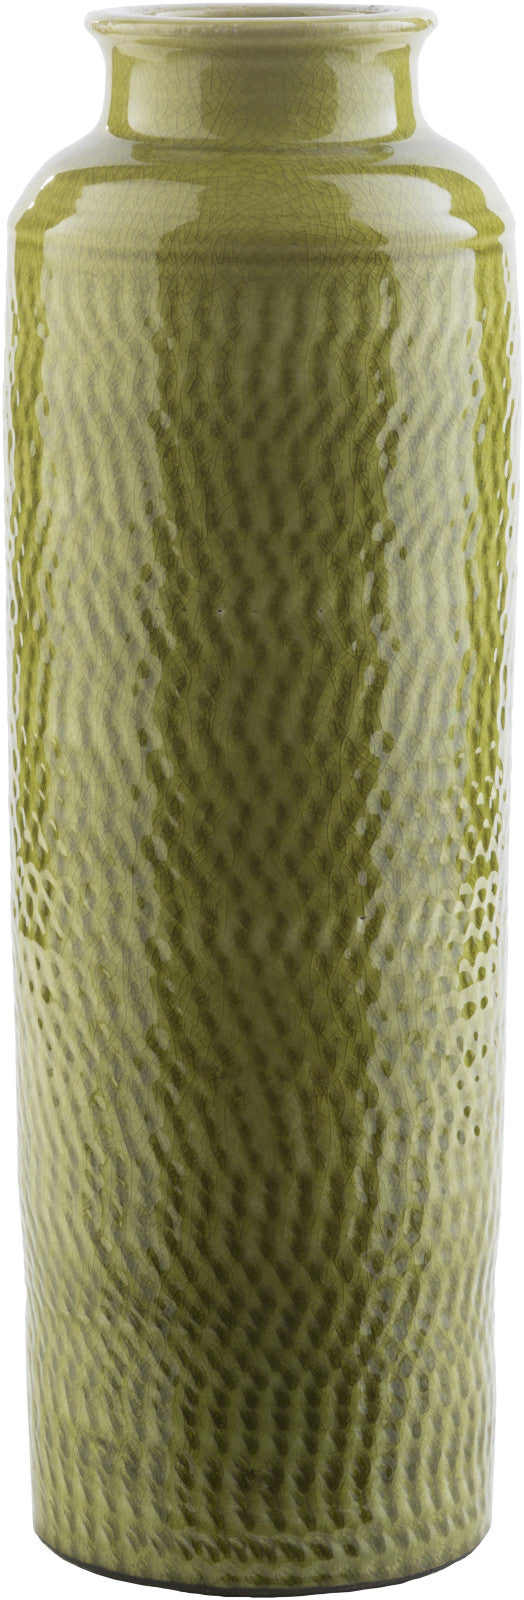 Surya Zuniga ZNG-732 Vase main image